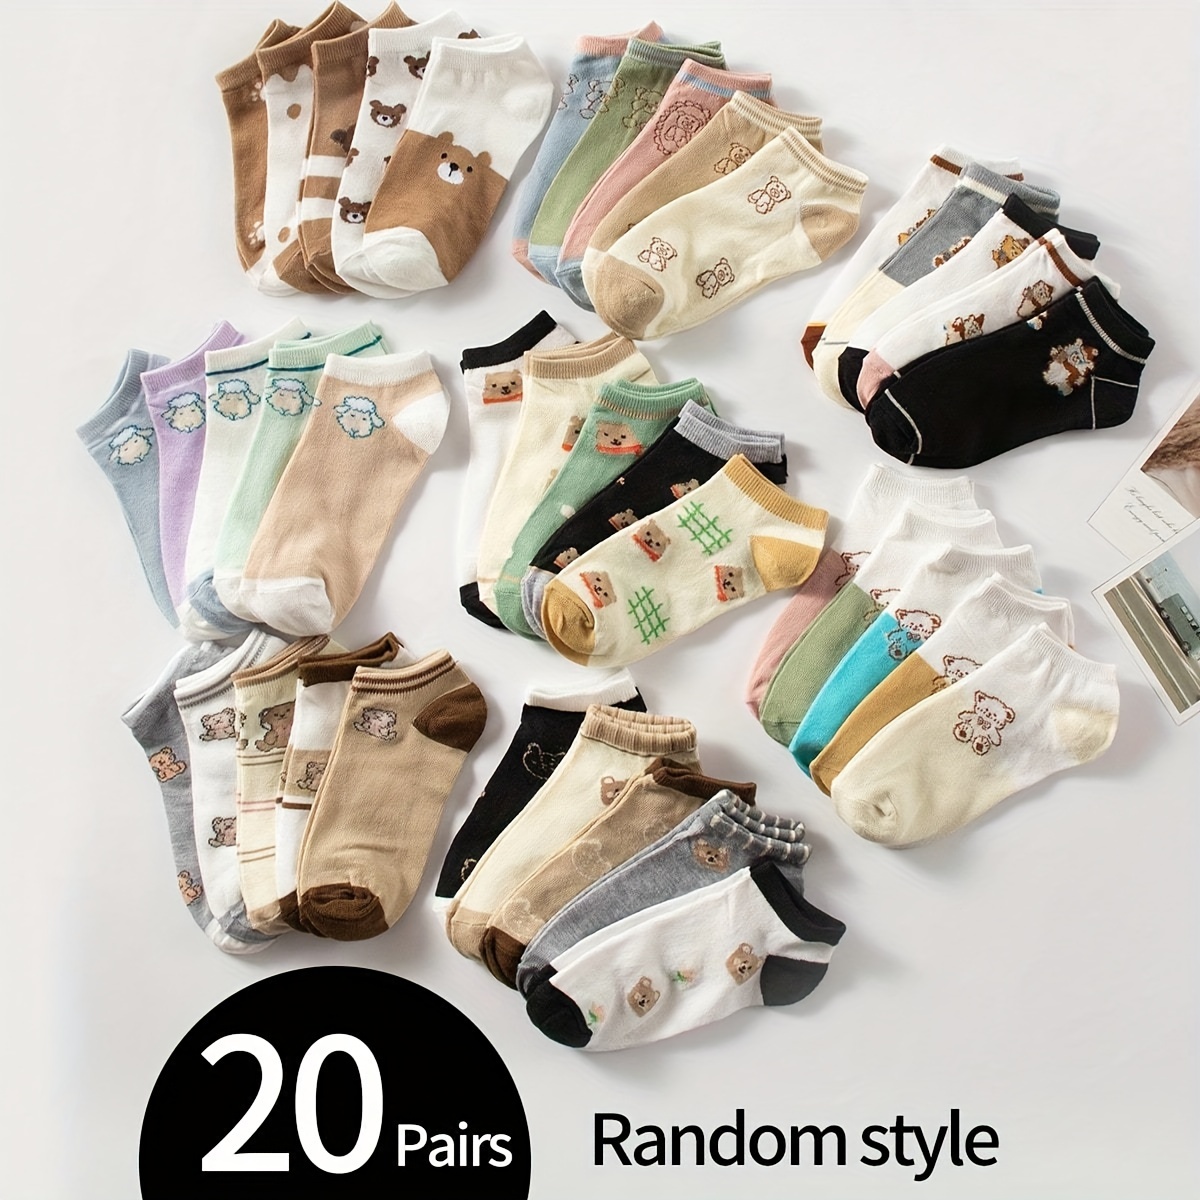 

20 Pairs Cartoon Bear Socks, Soft & Comfy Low Cut Ankle Socks, Women's Stockings & Hosiery